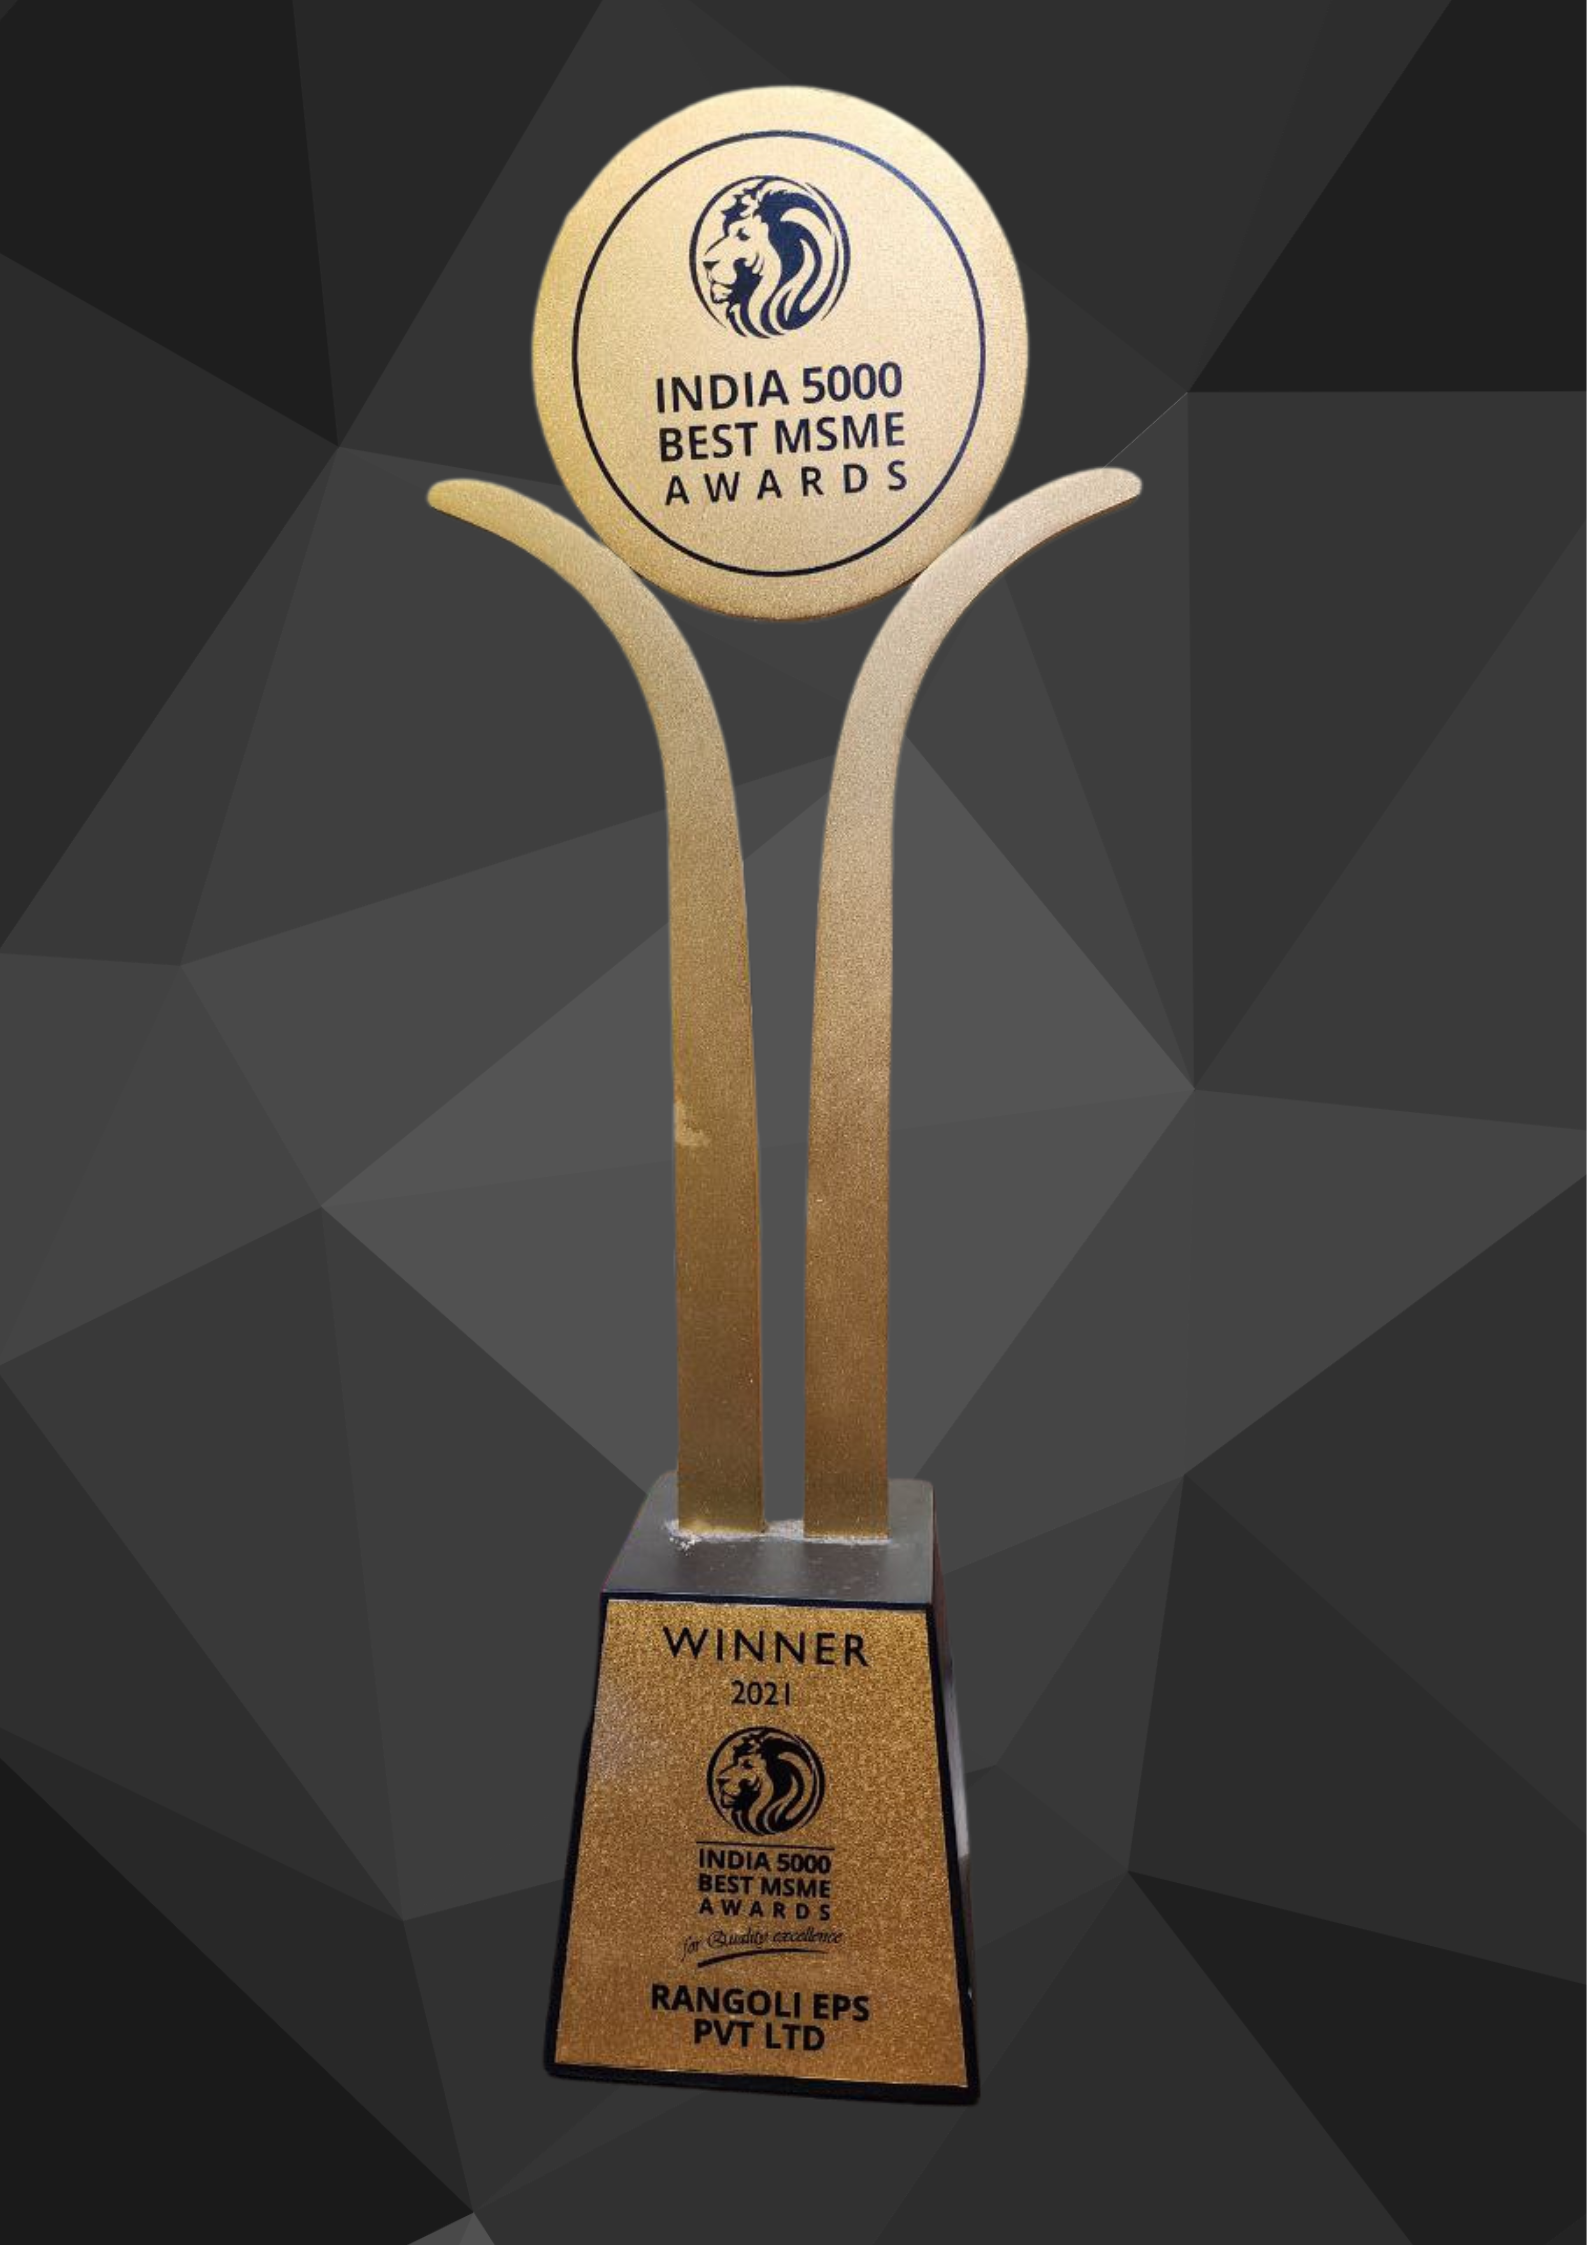 India 5000 best msme award